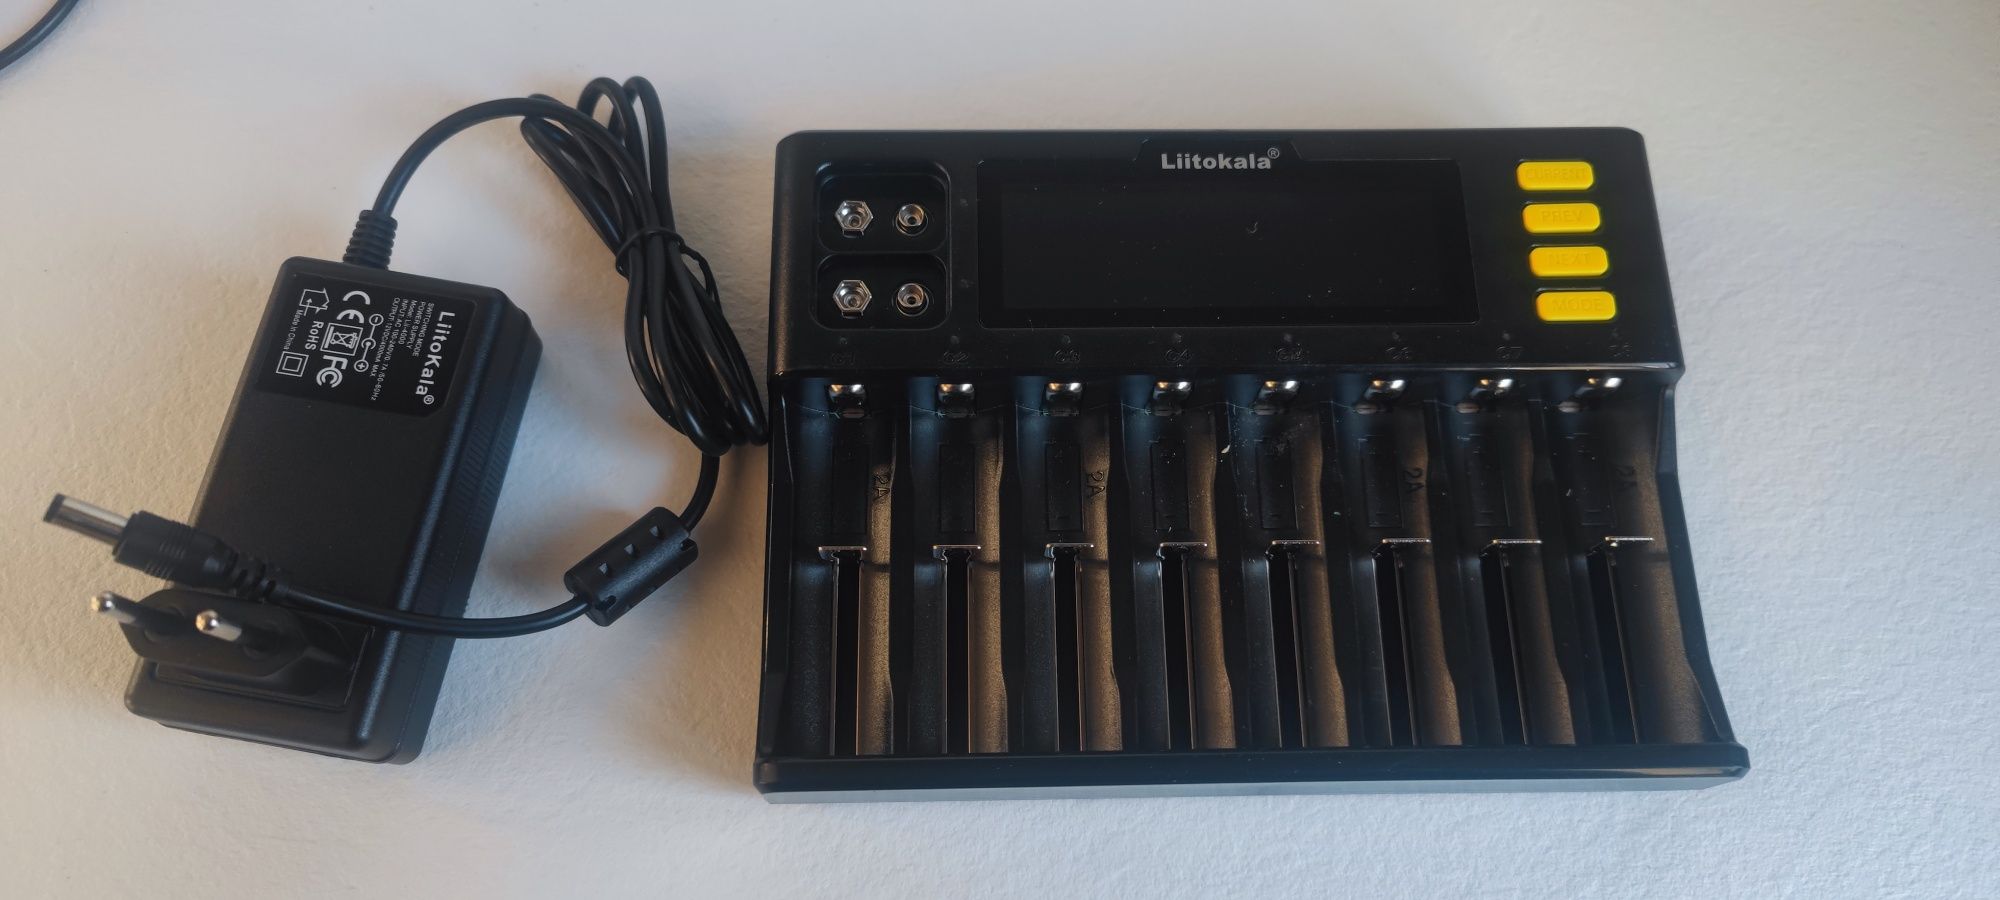 LiitoKala Lii-S8 Професионално, зарядно и тестер за батерии LiitoKala